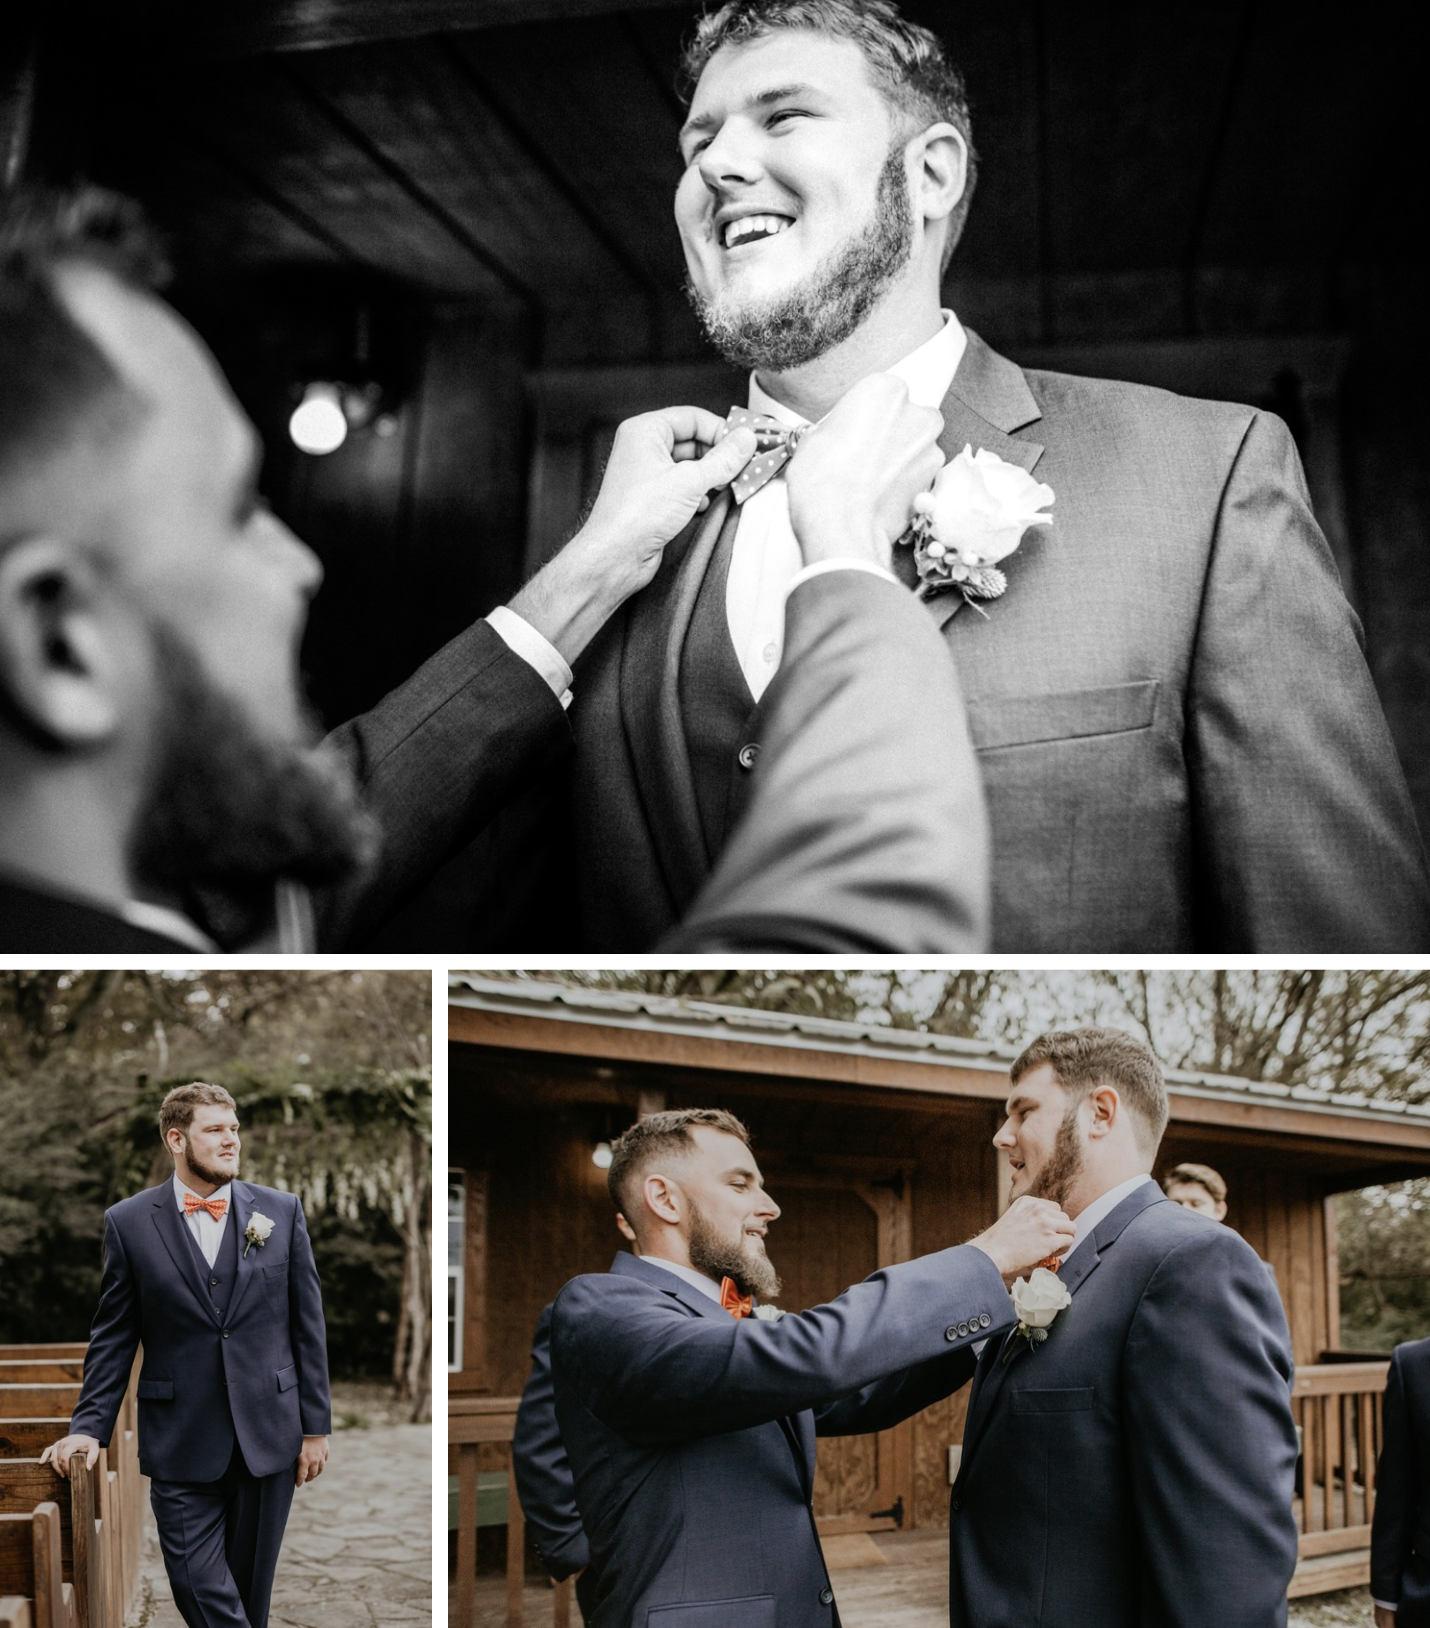 The best man straightening the groom's bow tie.